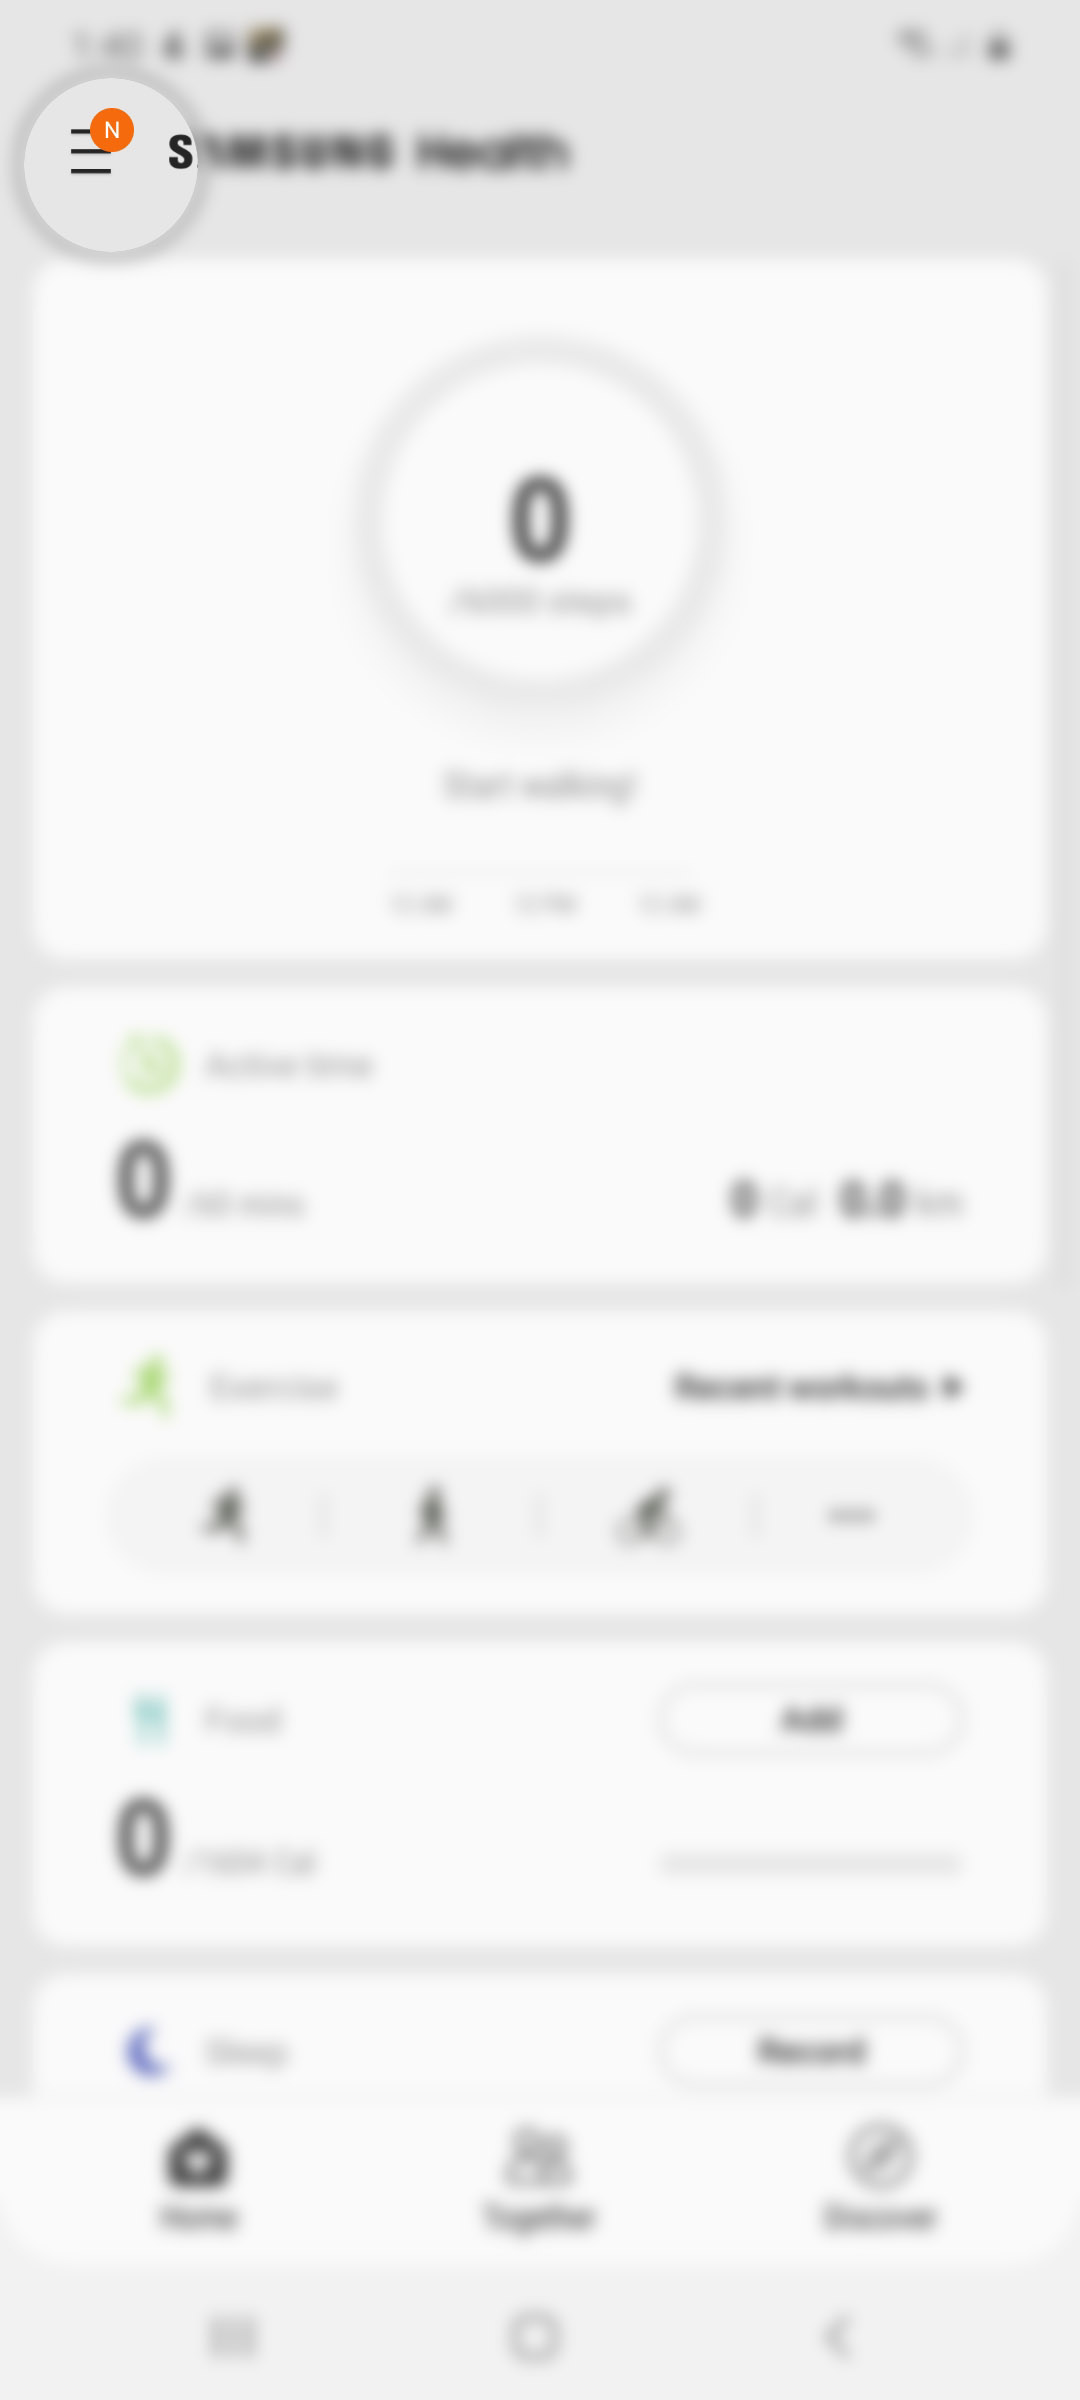 set up samsung health profile galaxy s20 quick menu navigation icon